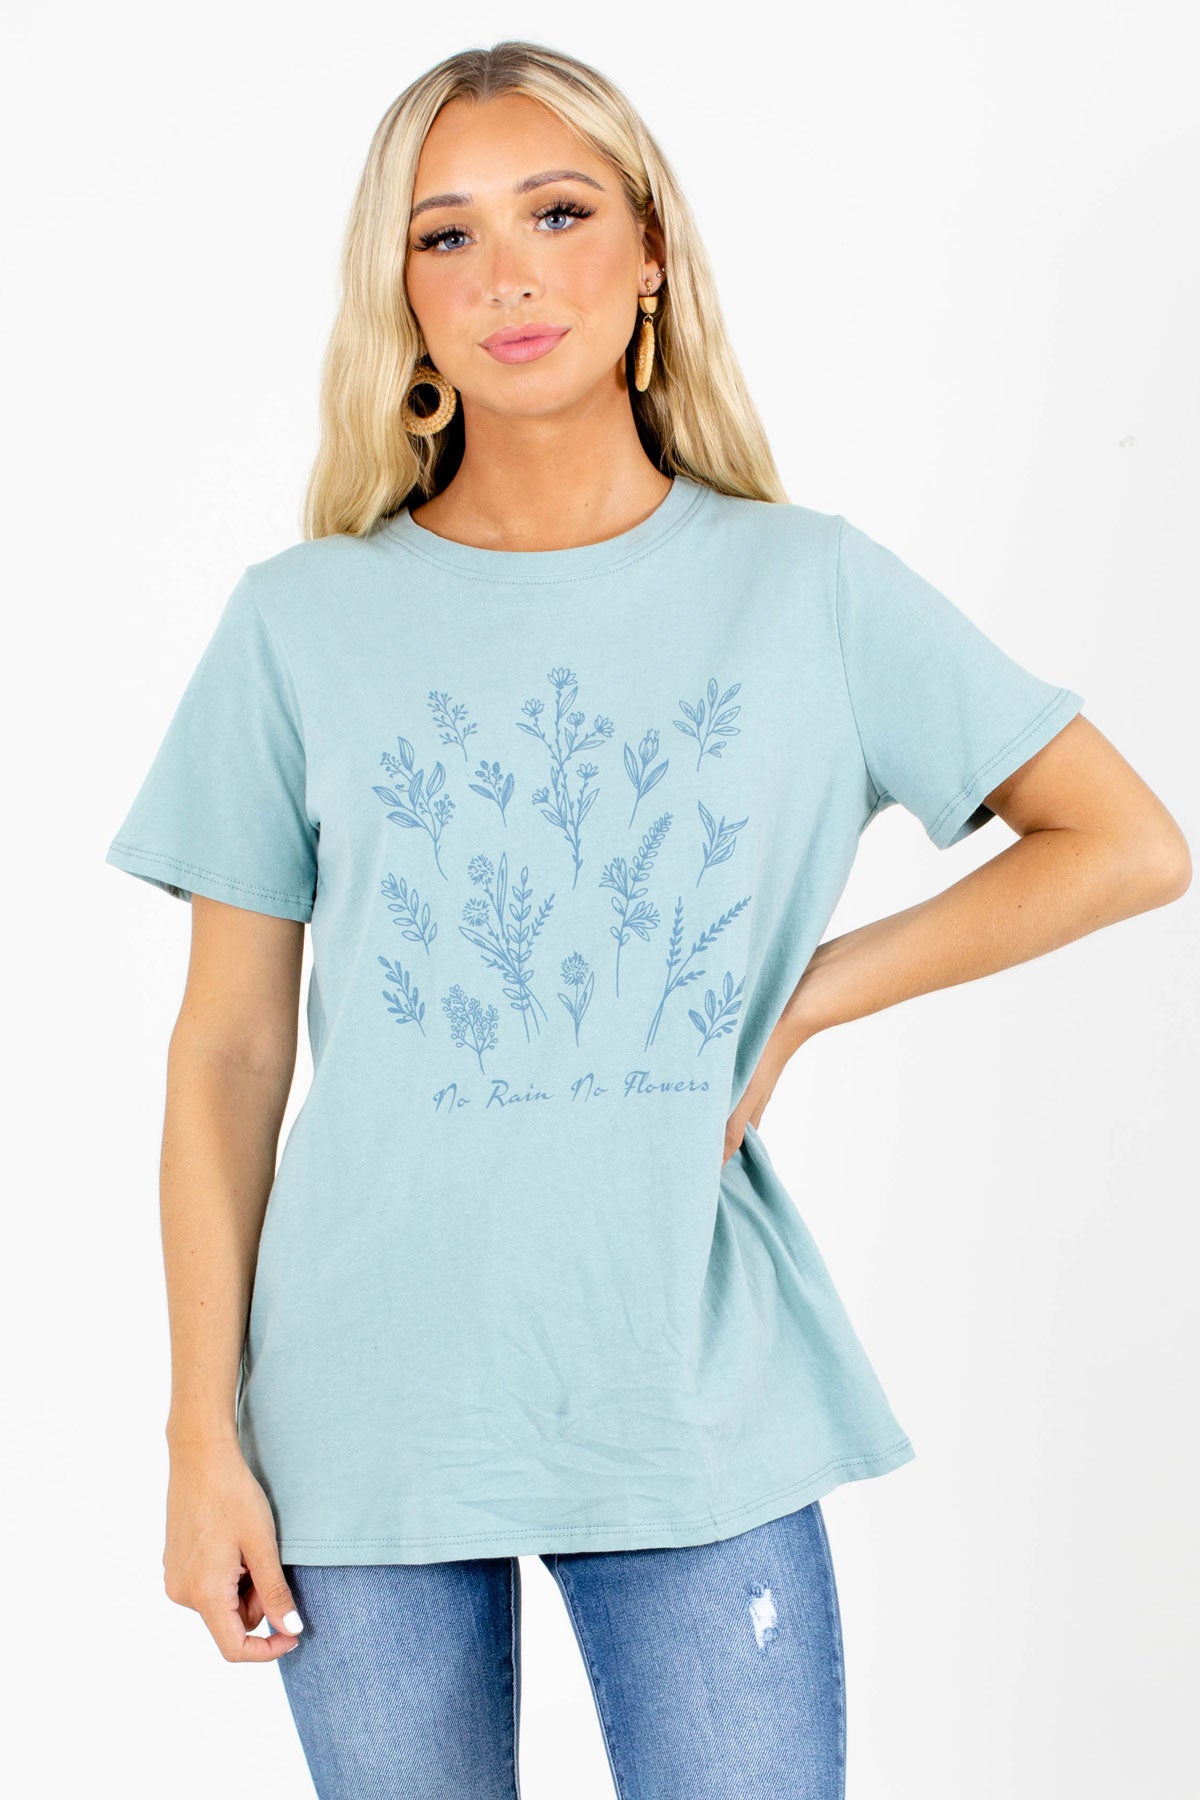 Blue Round Neckline Boutique Graphic T-Shirts for Women